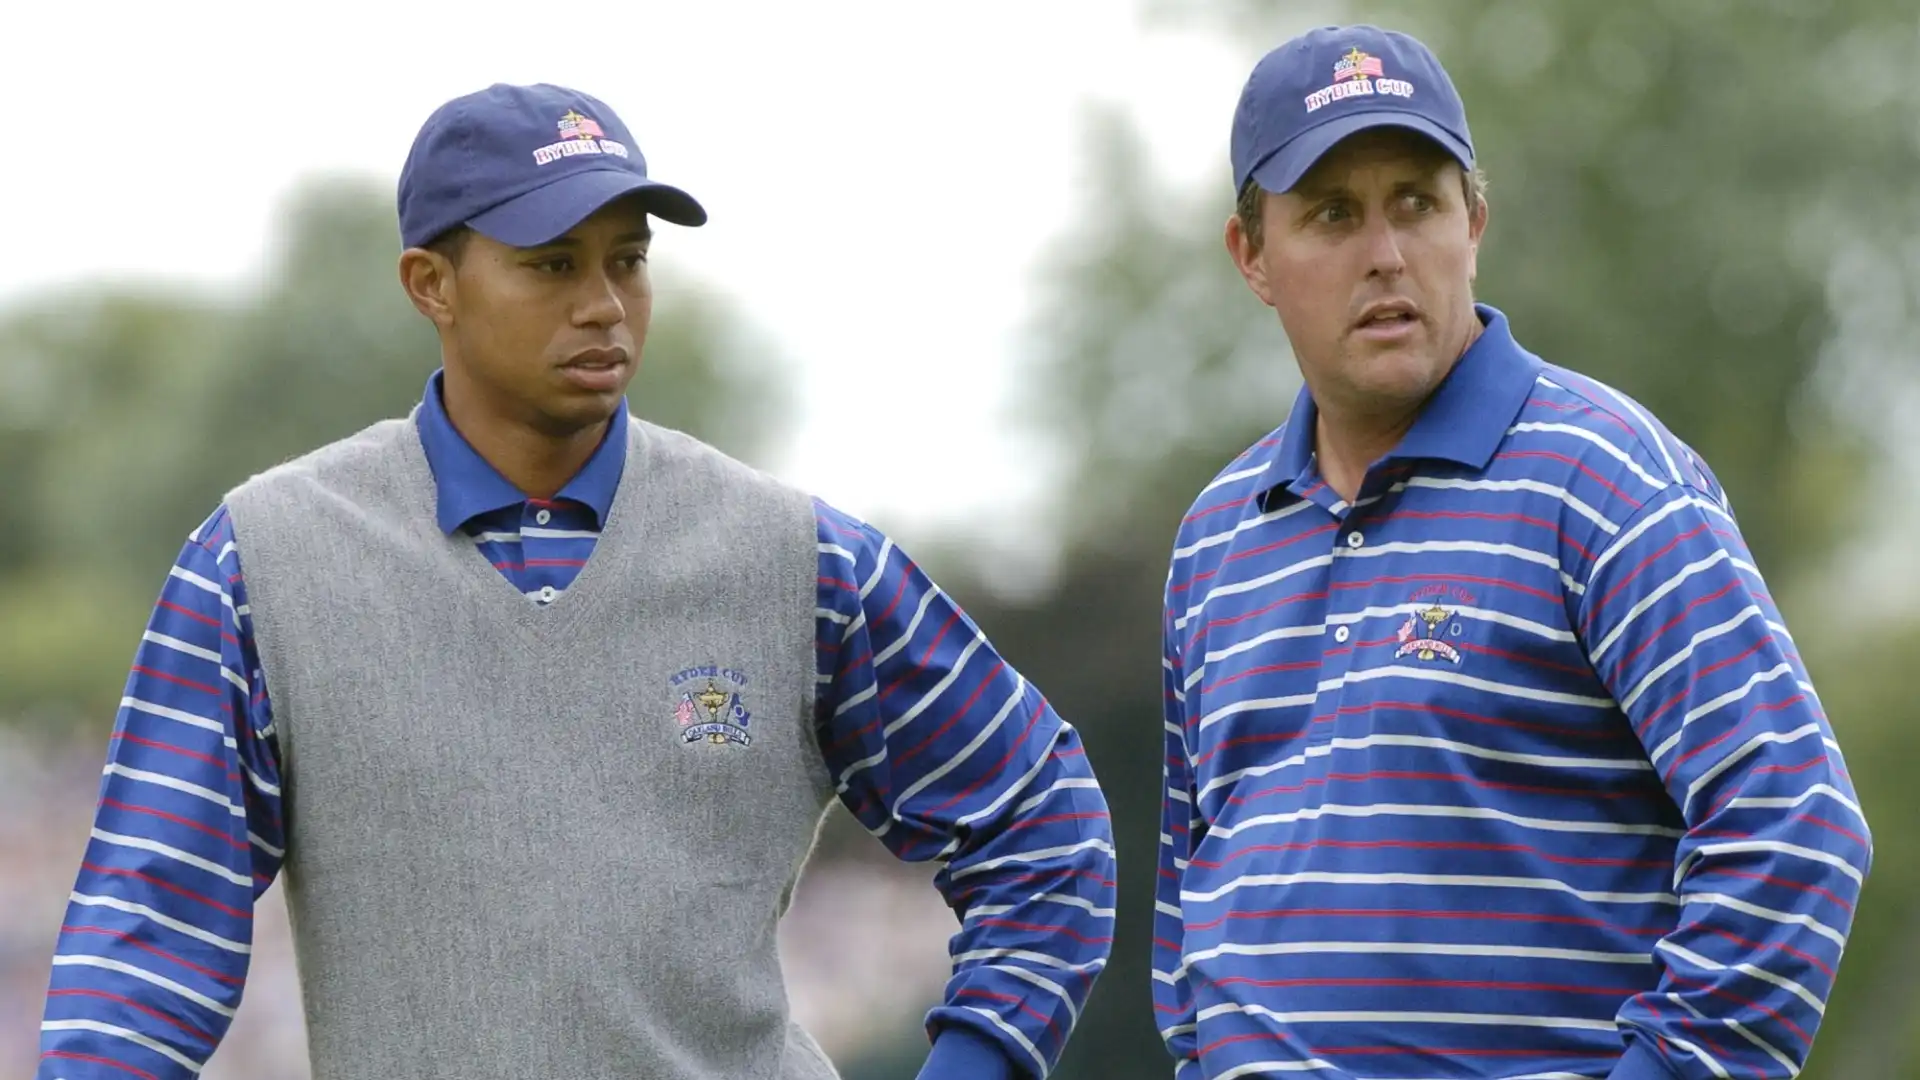 2004: Tiger Woods (Golf), guadagni totali stimati 80,3 milioni di dollari